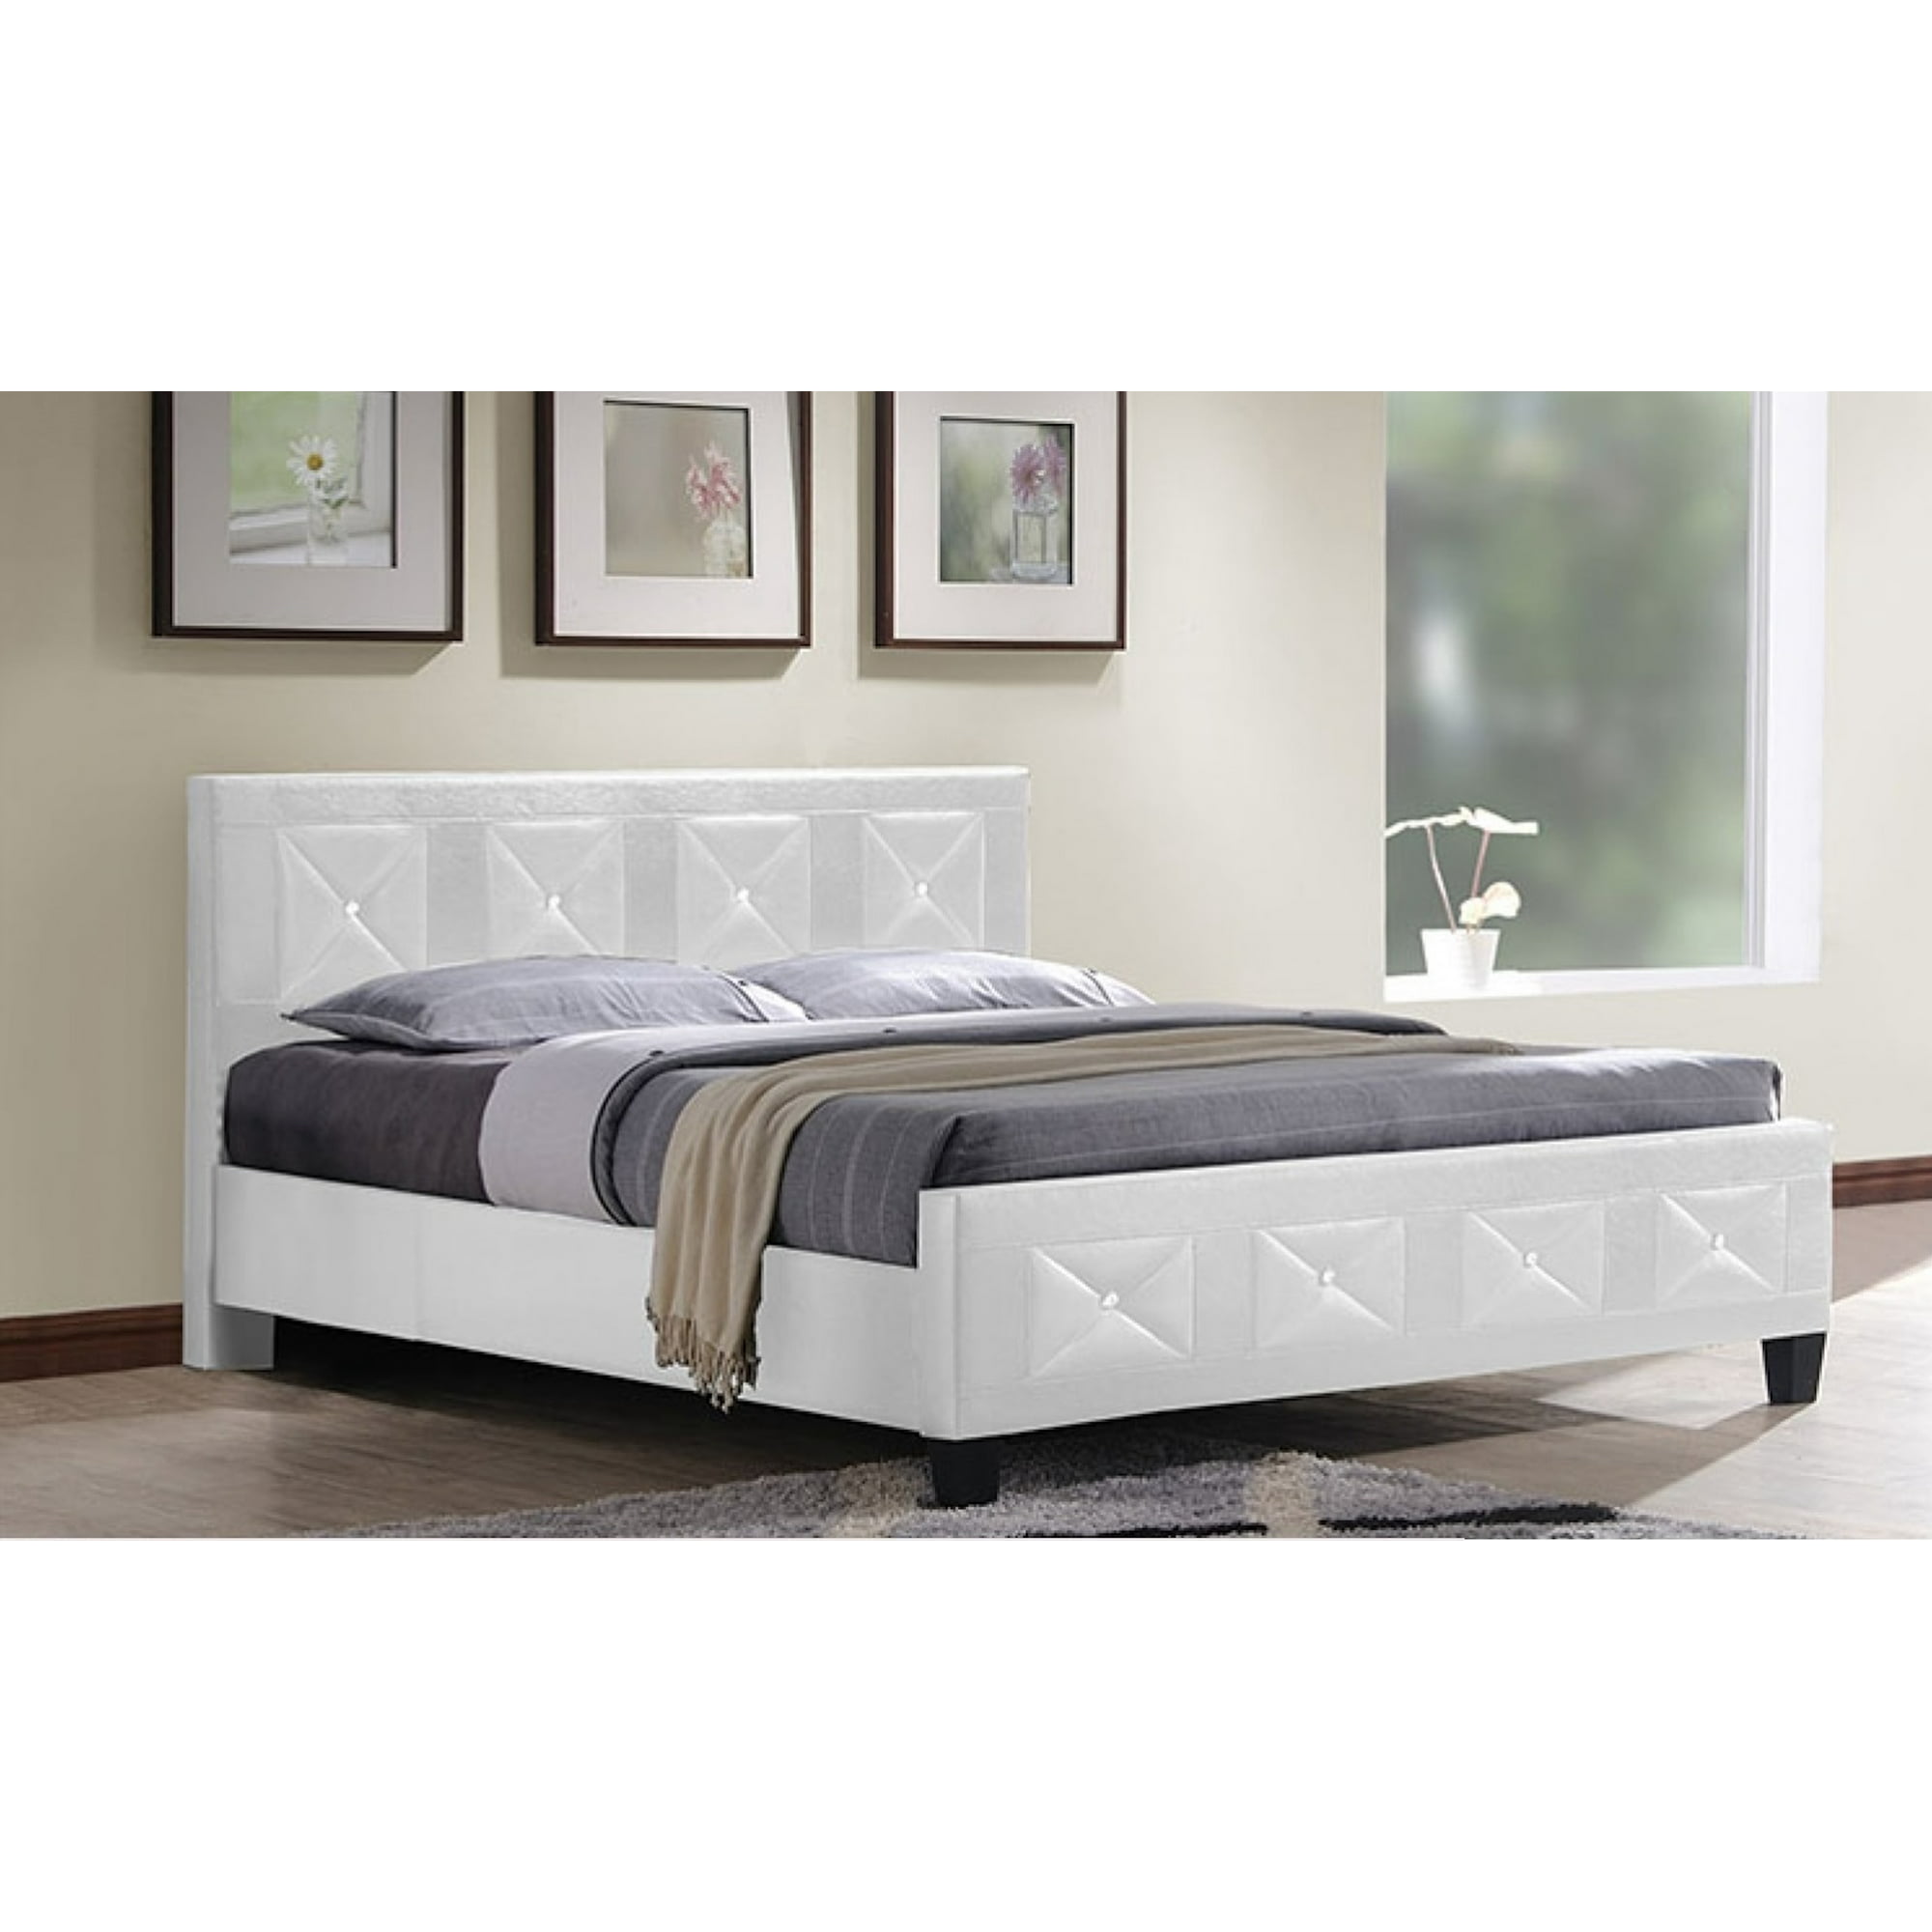 Aerys Double Size Upholstered Platform, Double Size Bed Frame